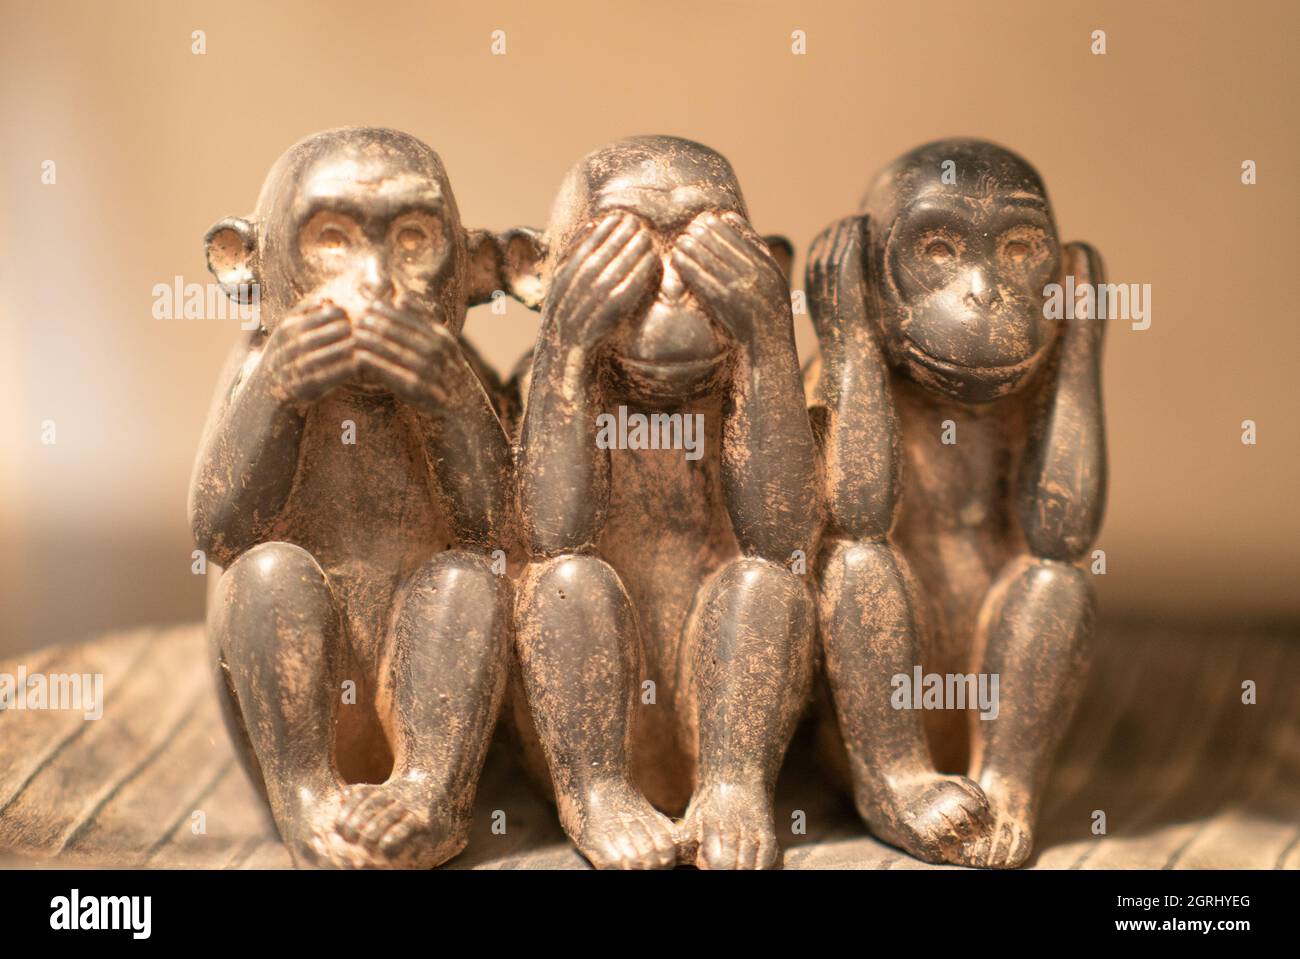 Three wise monkeys, aged brass ornament Stock Photo